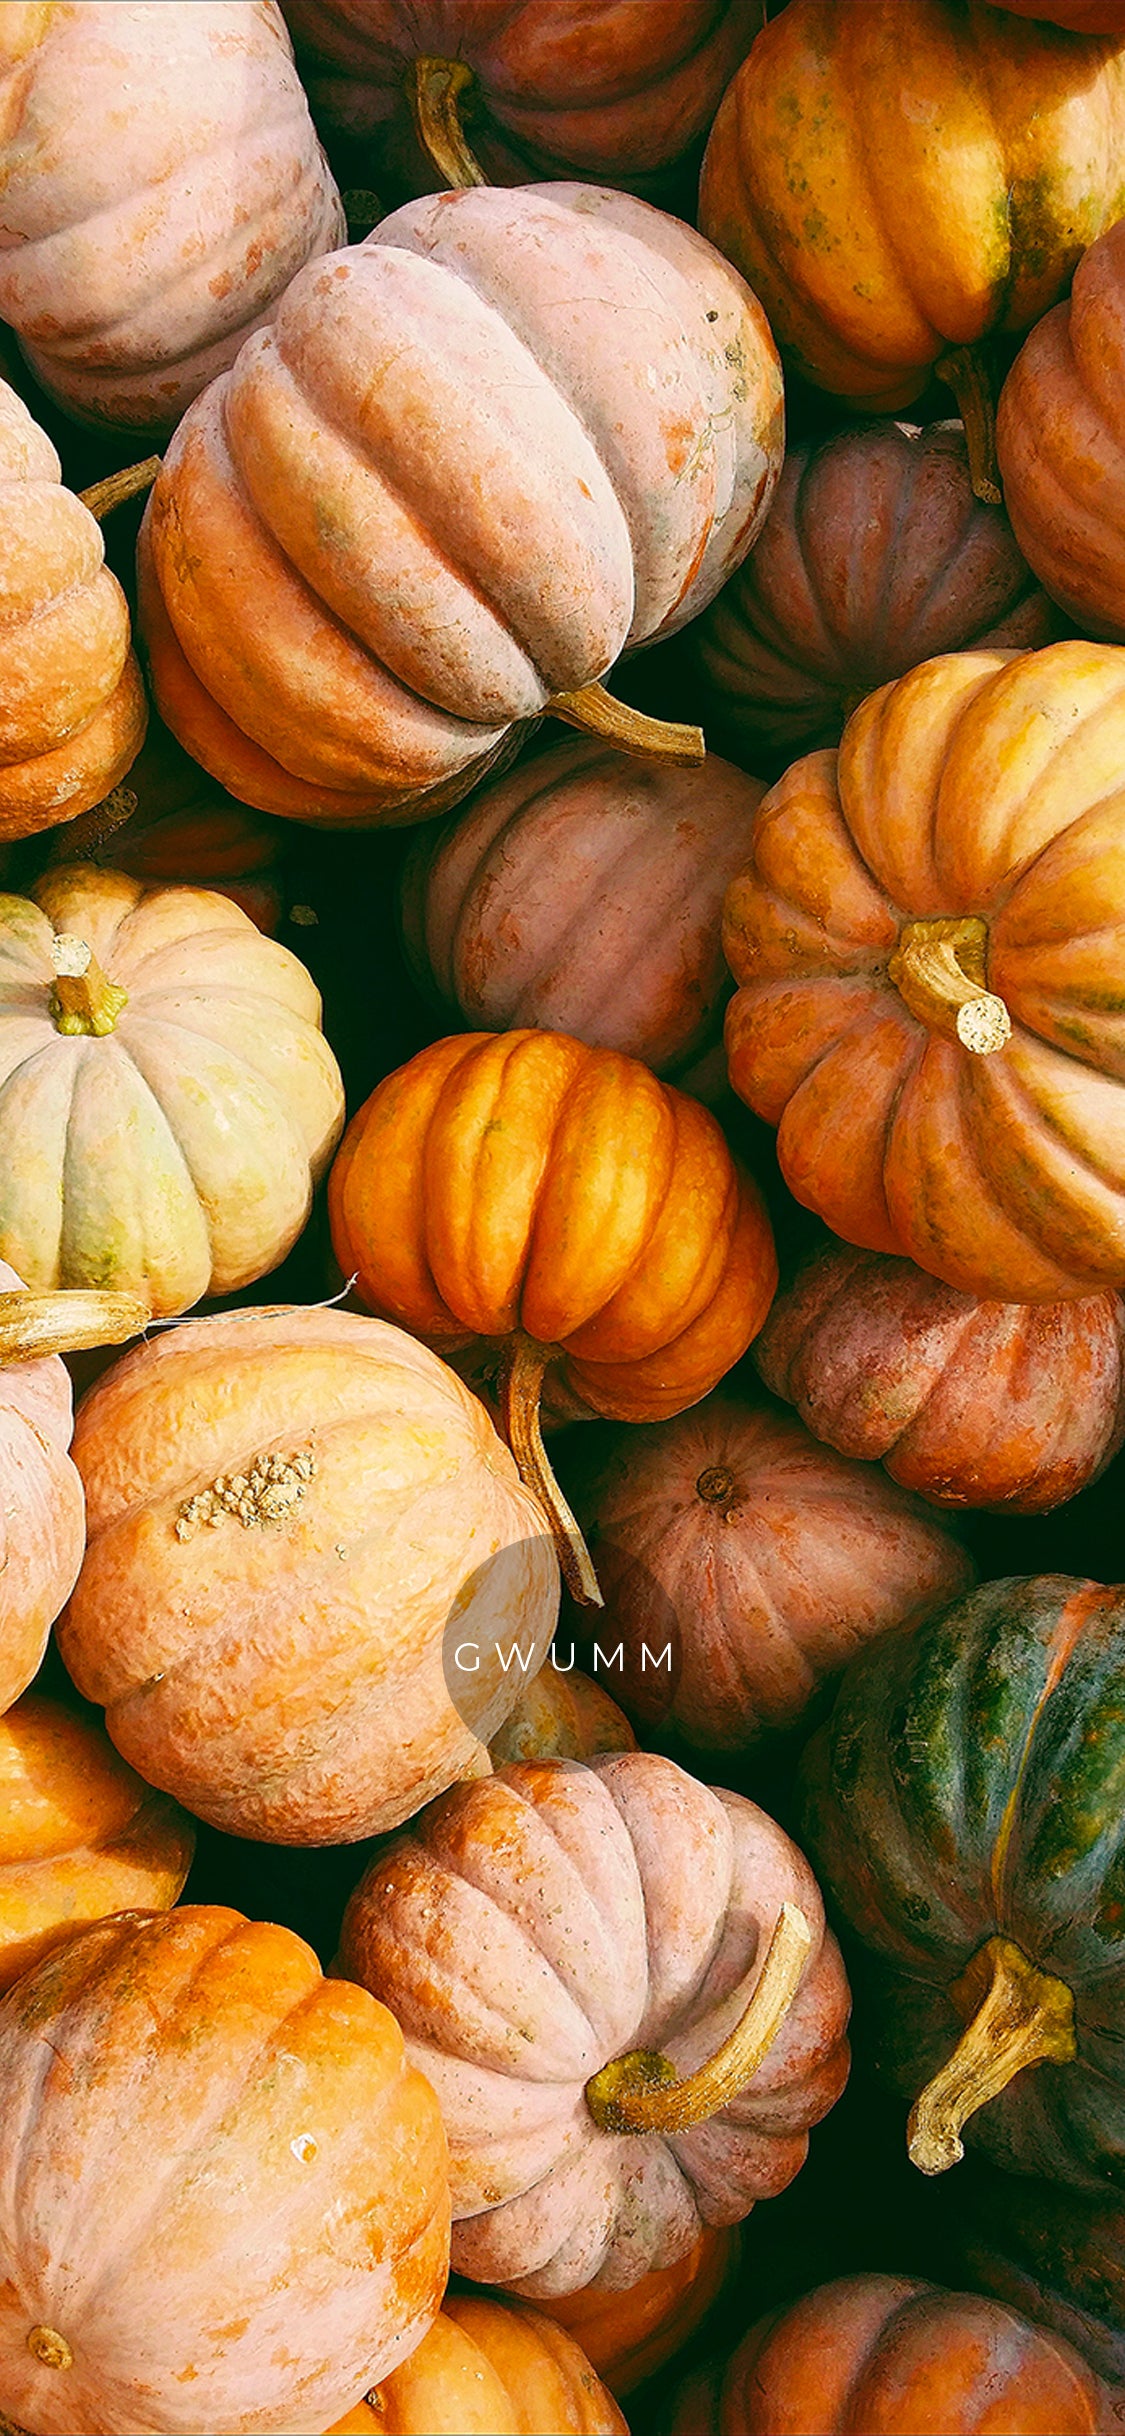 mobile screensaver pumpkins by gwumm